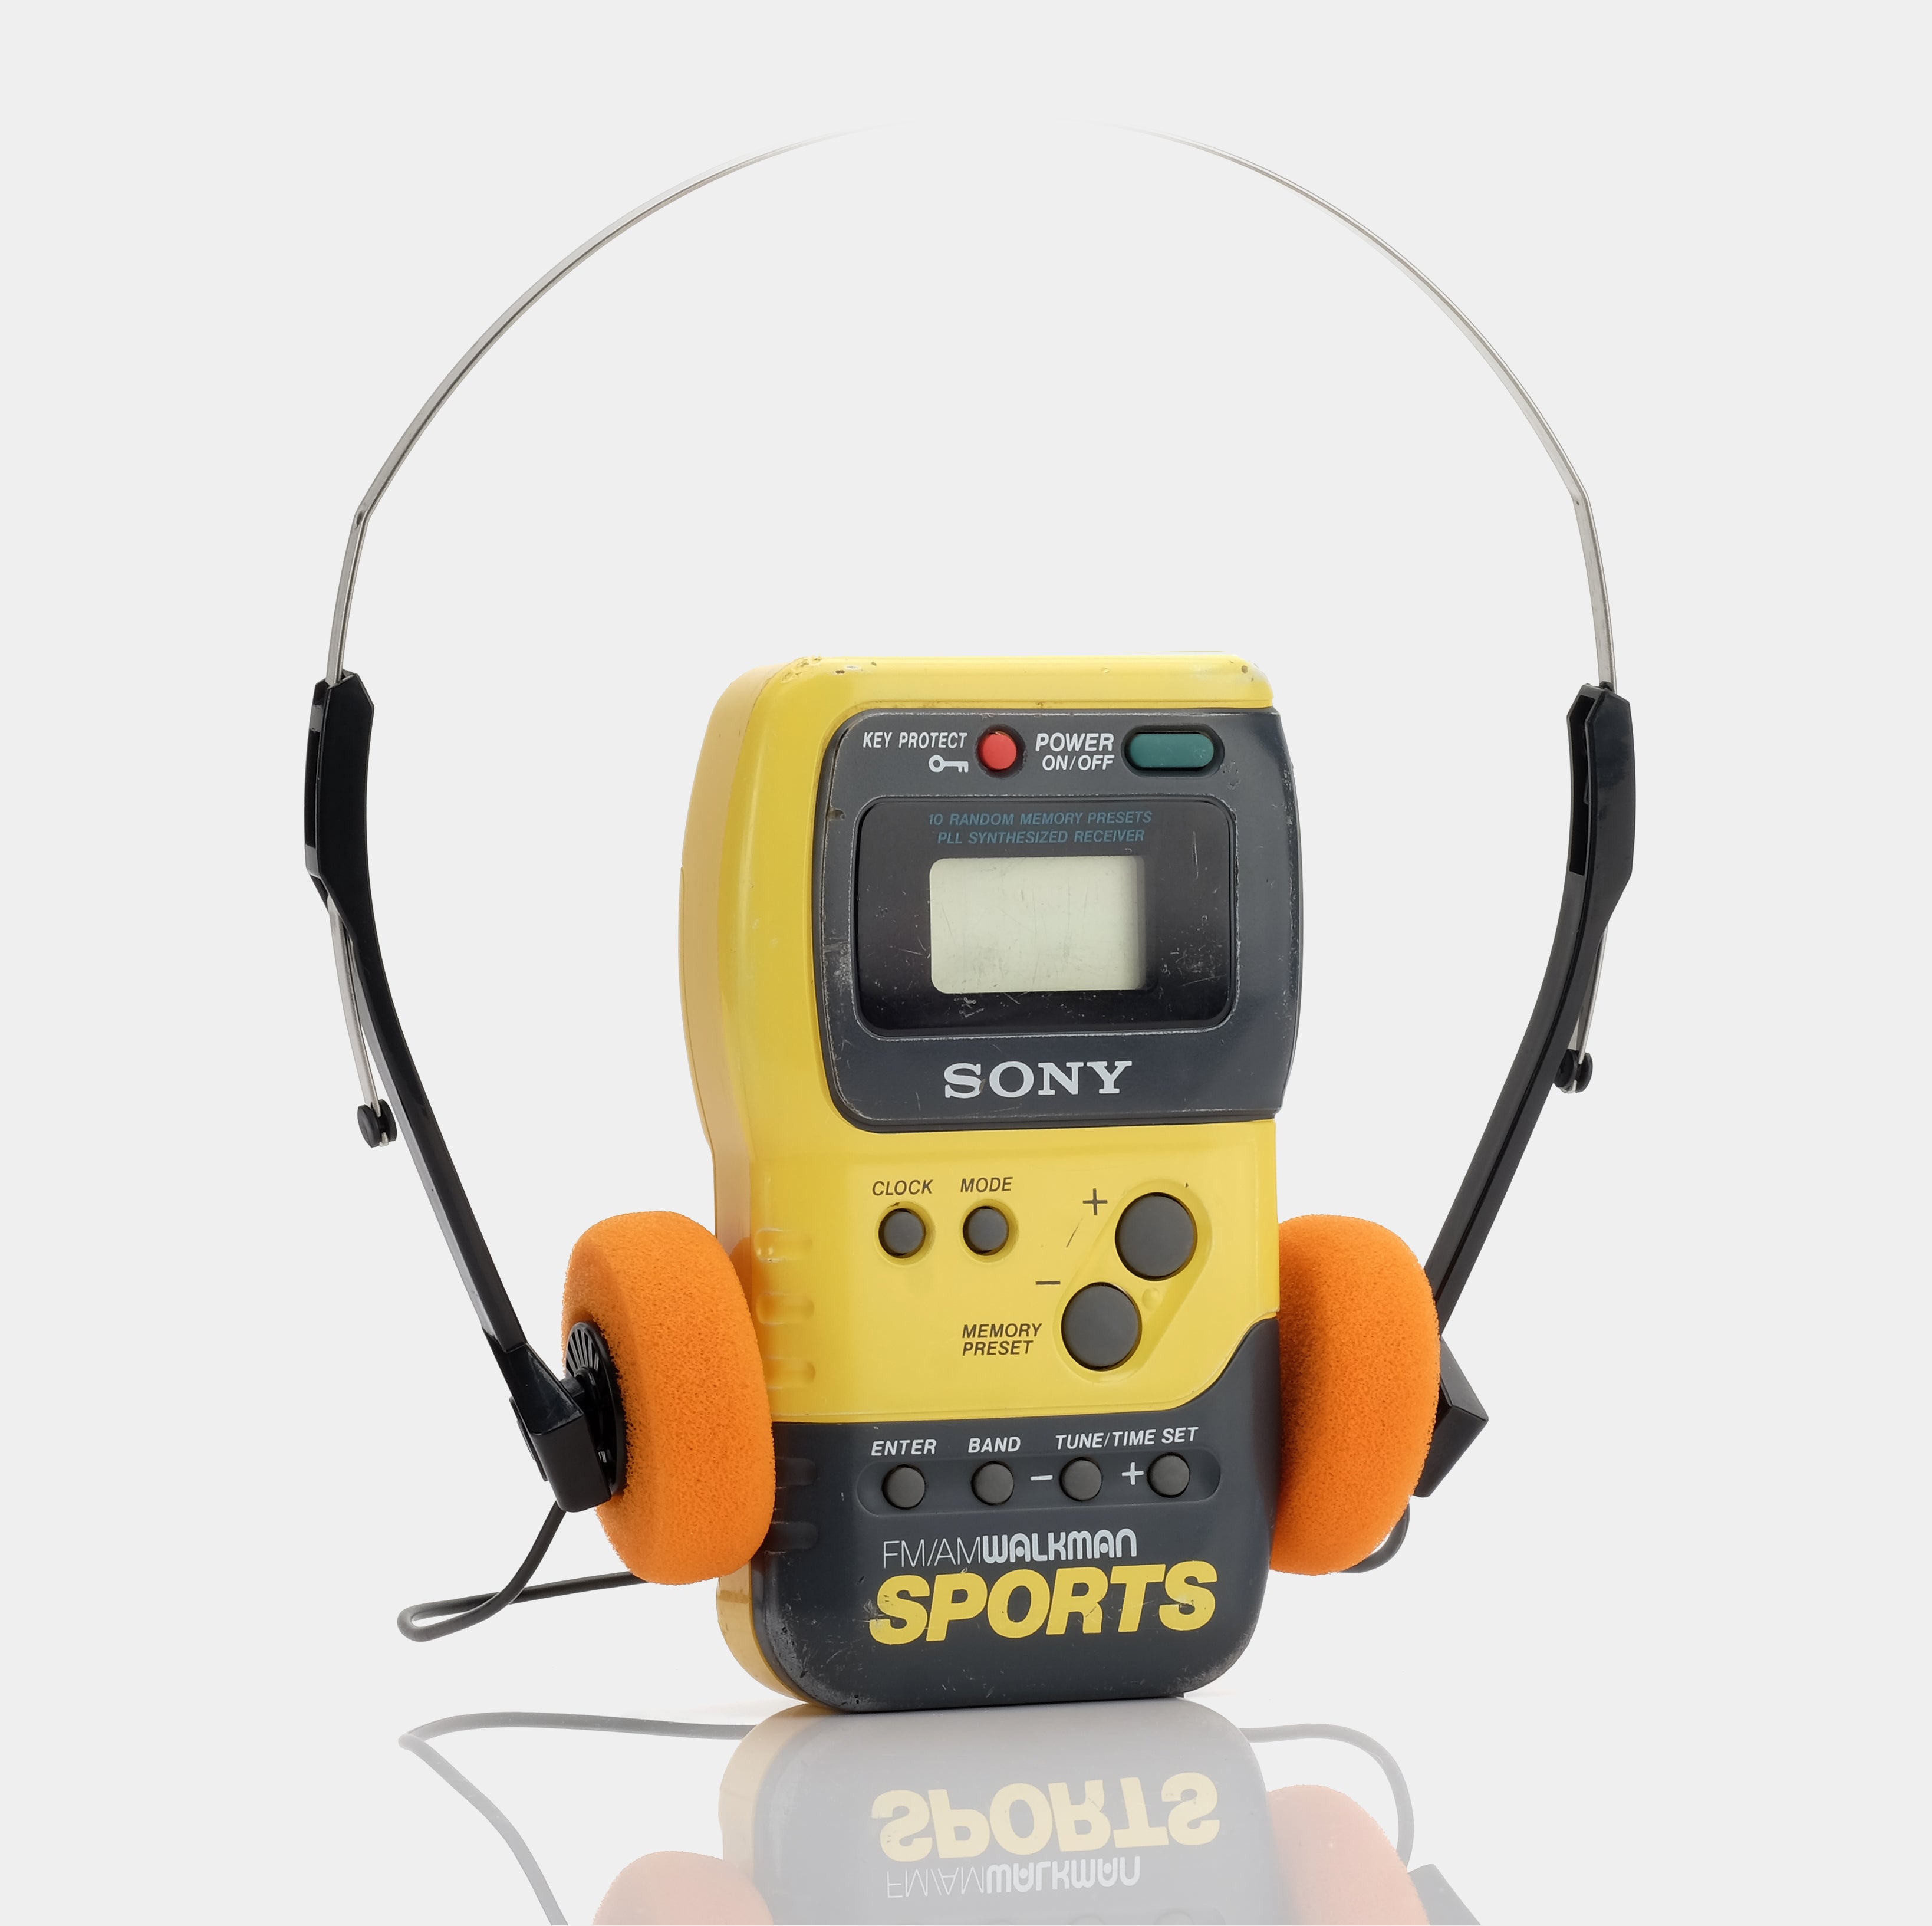 Sony Walkman Sports SRF-M70 AM/FM Portable Radio